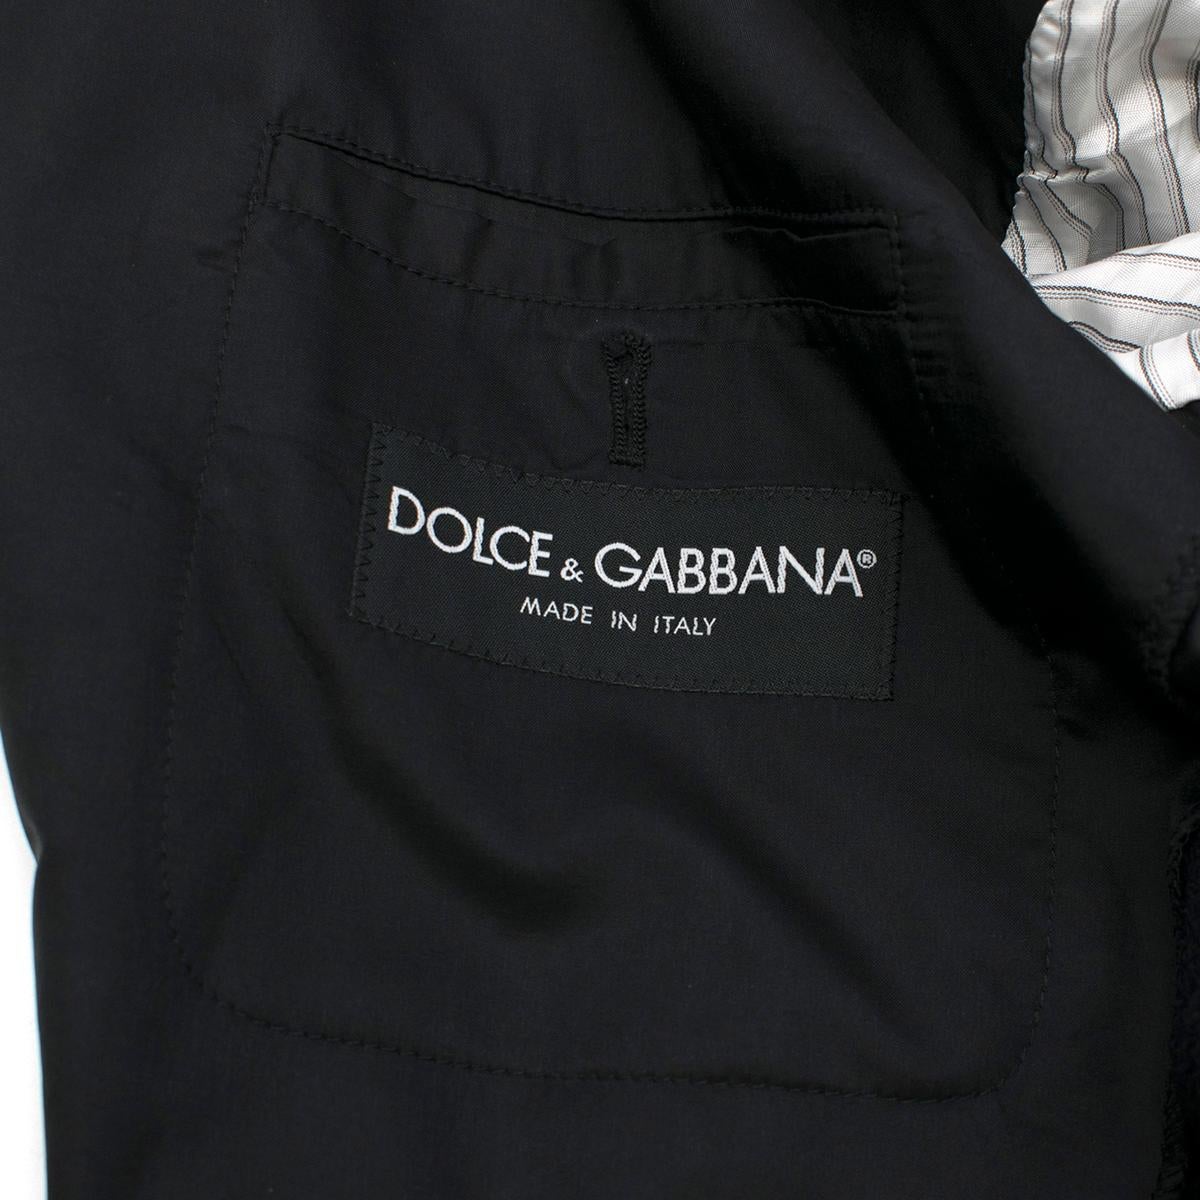 Dolce & Gabbana Men's Black Wool-blend Tailored Jacket estimated SIZE S 4